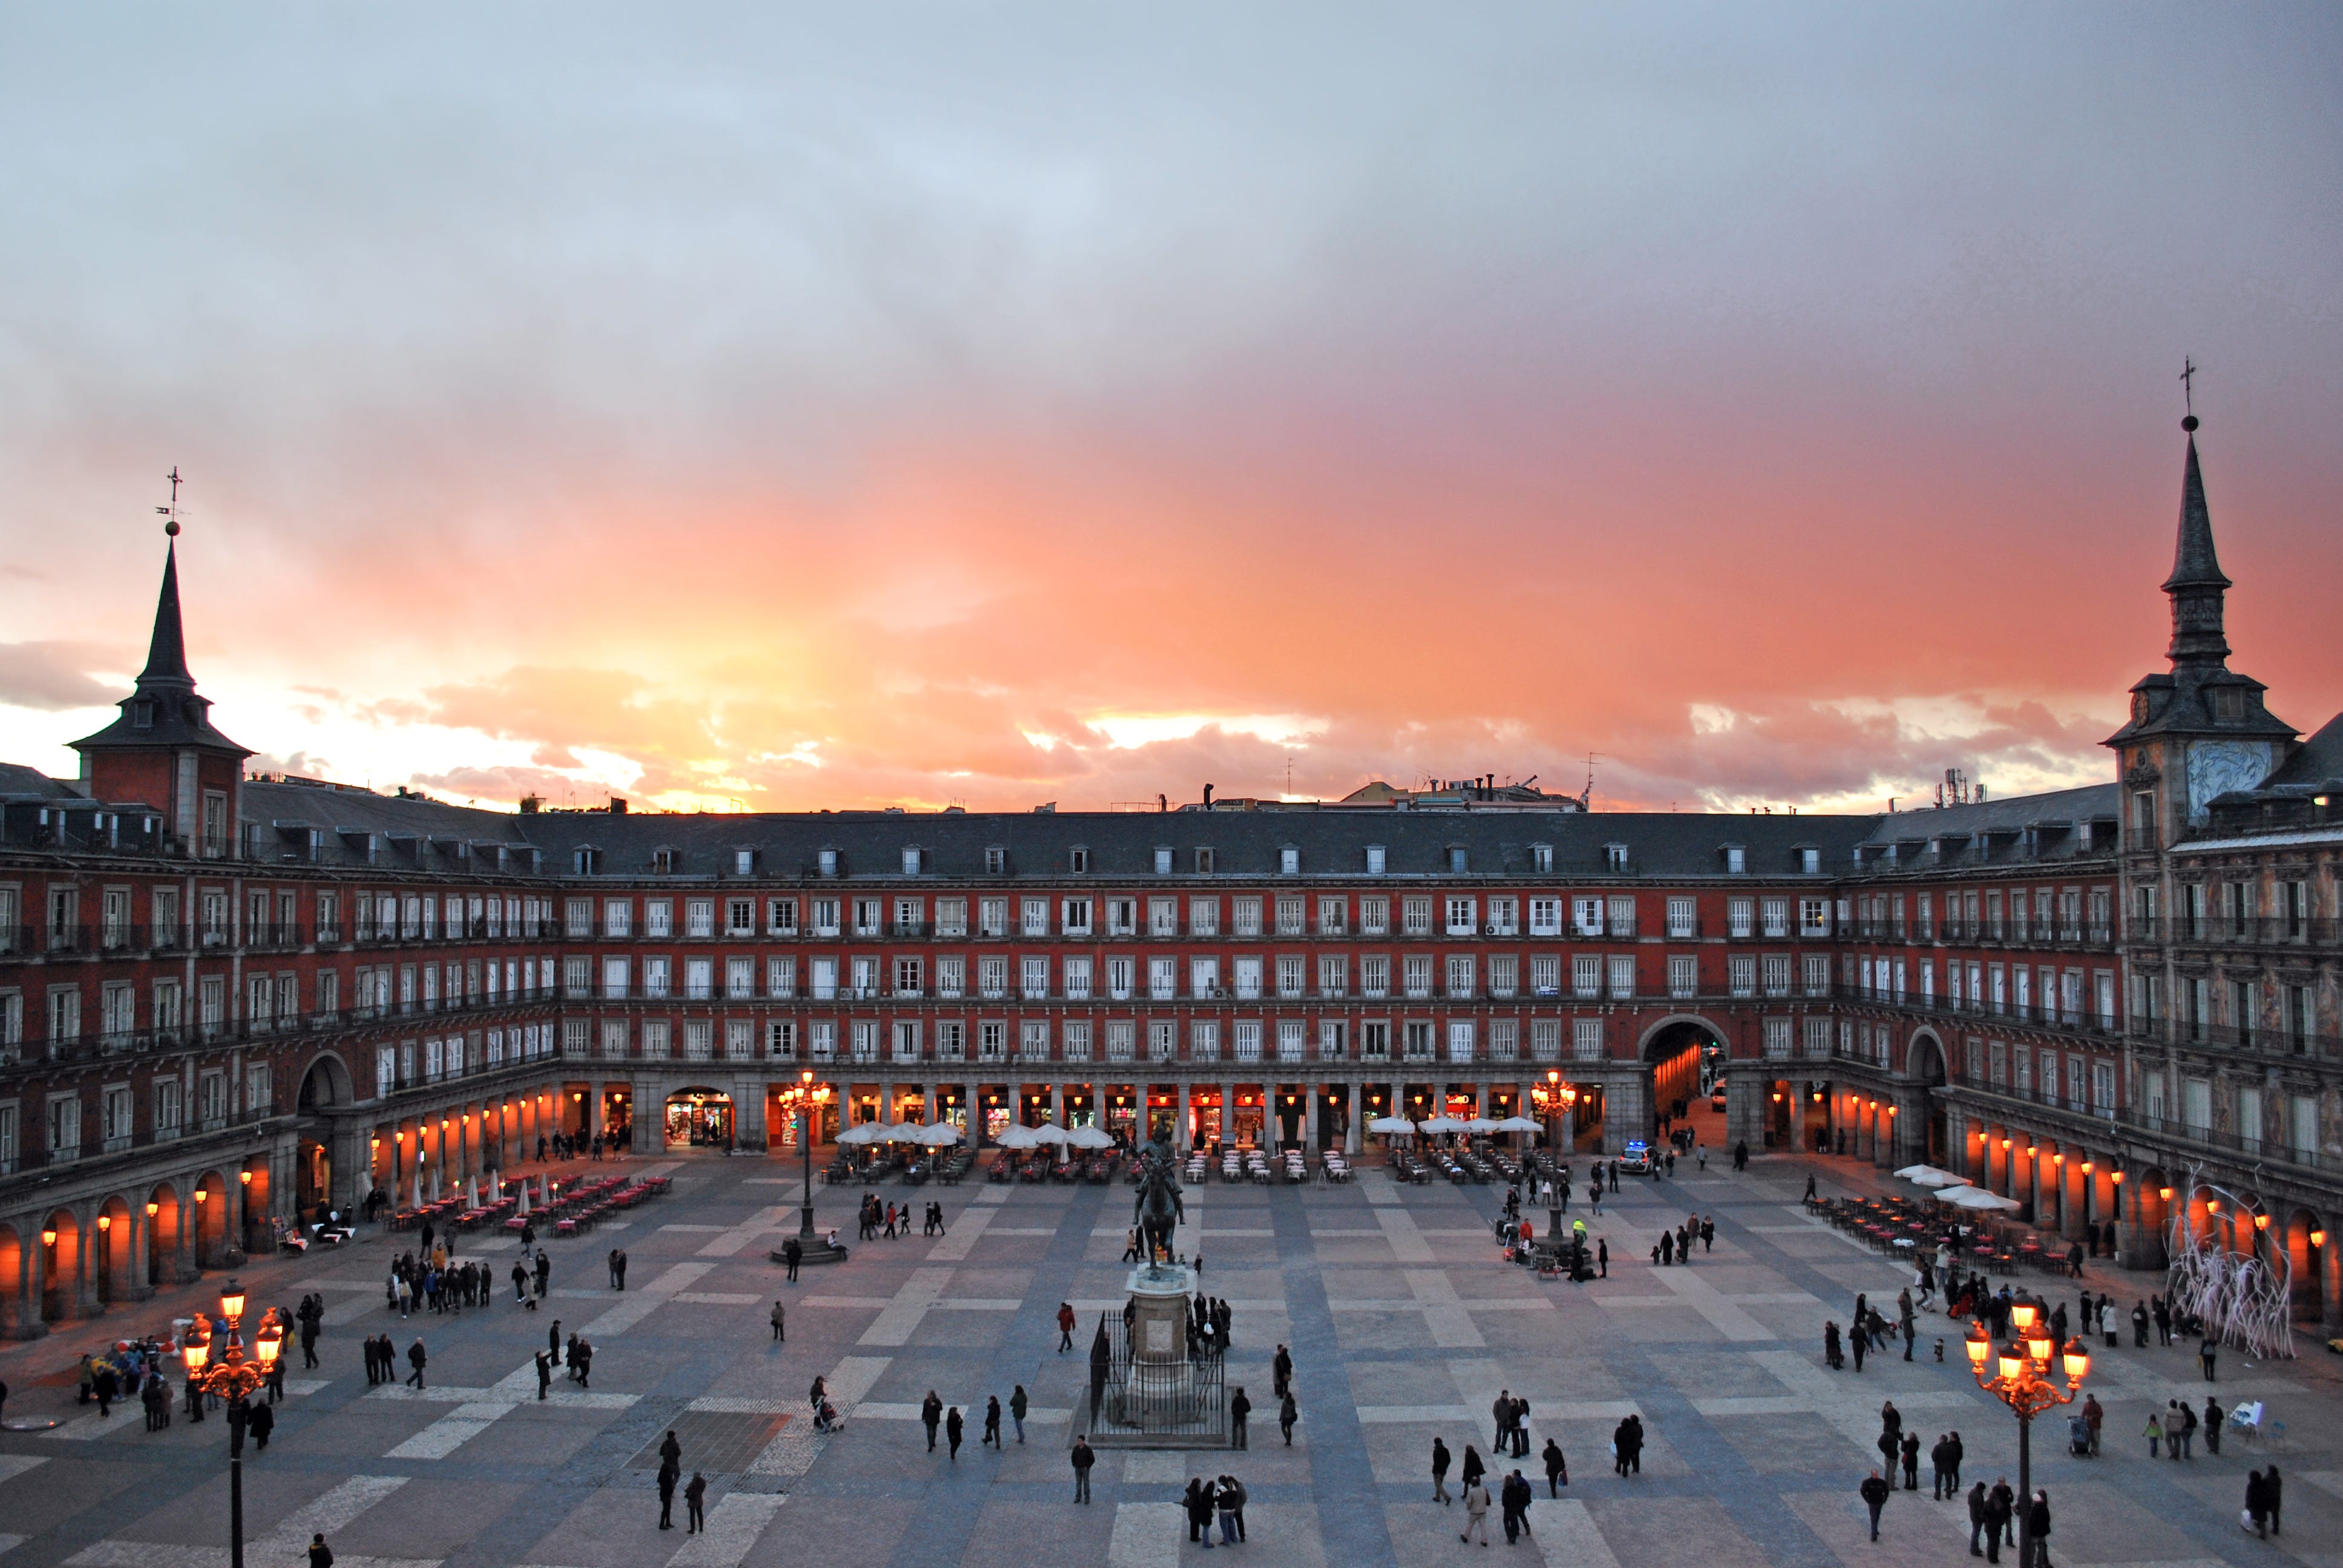 Architecture of Madrid - Wikipedia